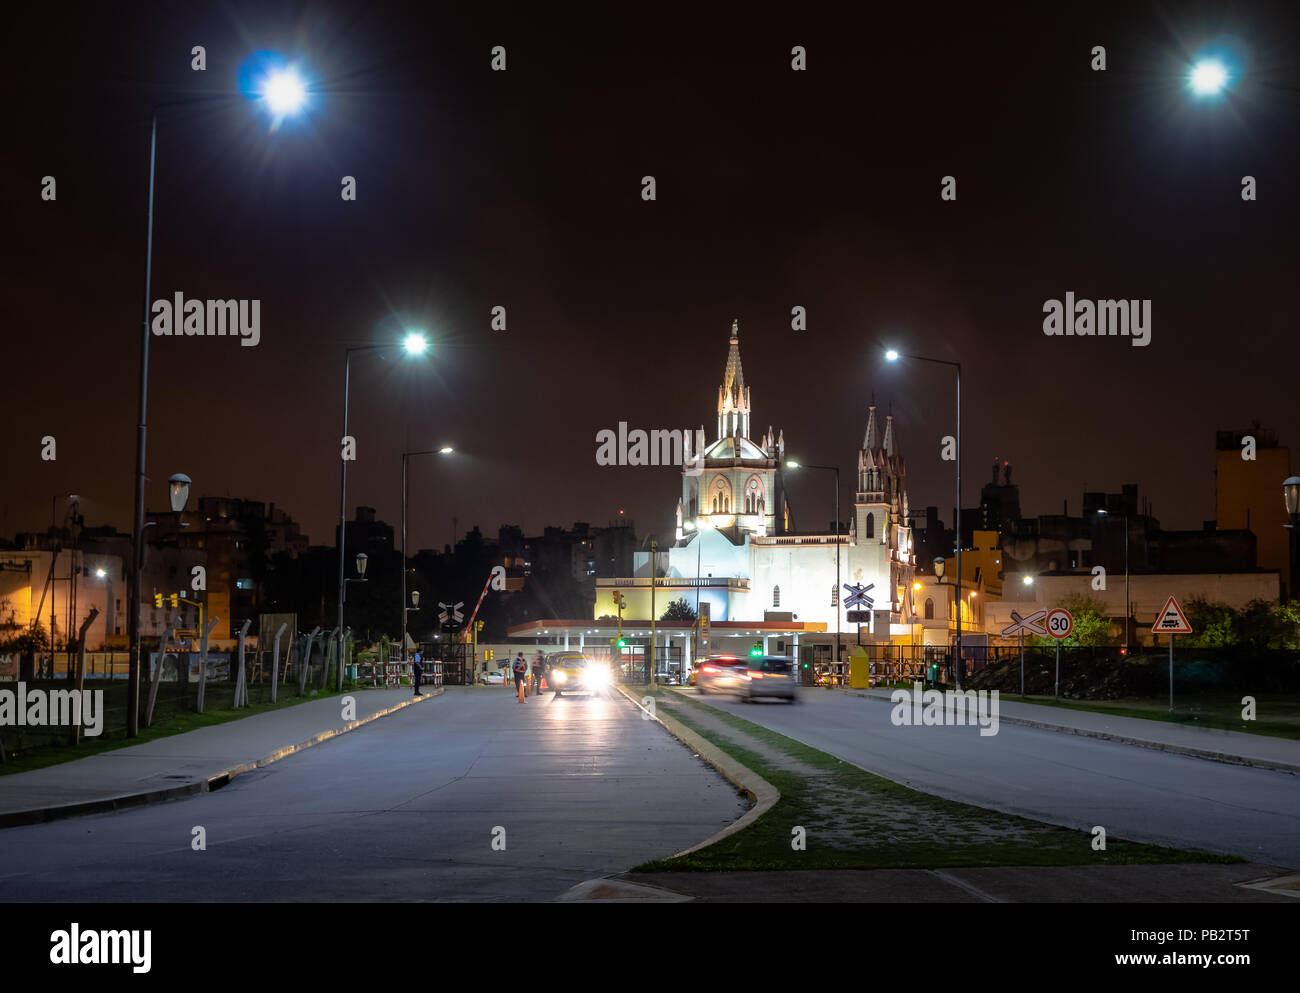 Santissimo Sacramento chiesa (Templo del Santisimo Sacramento) di notte - Cordoba, Argentina Foto Stock